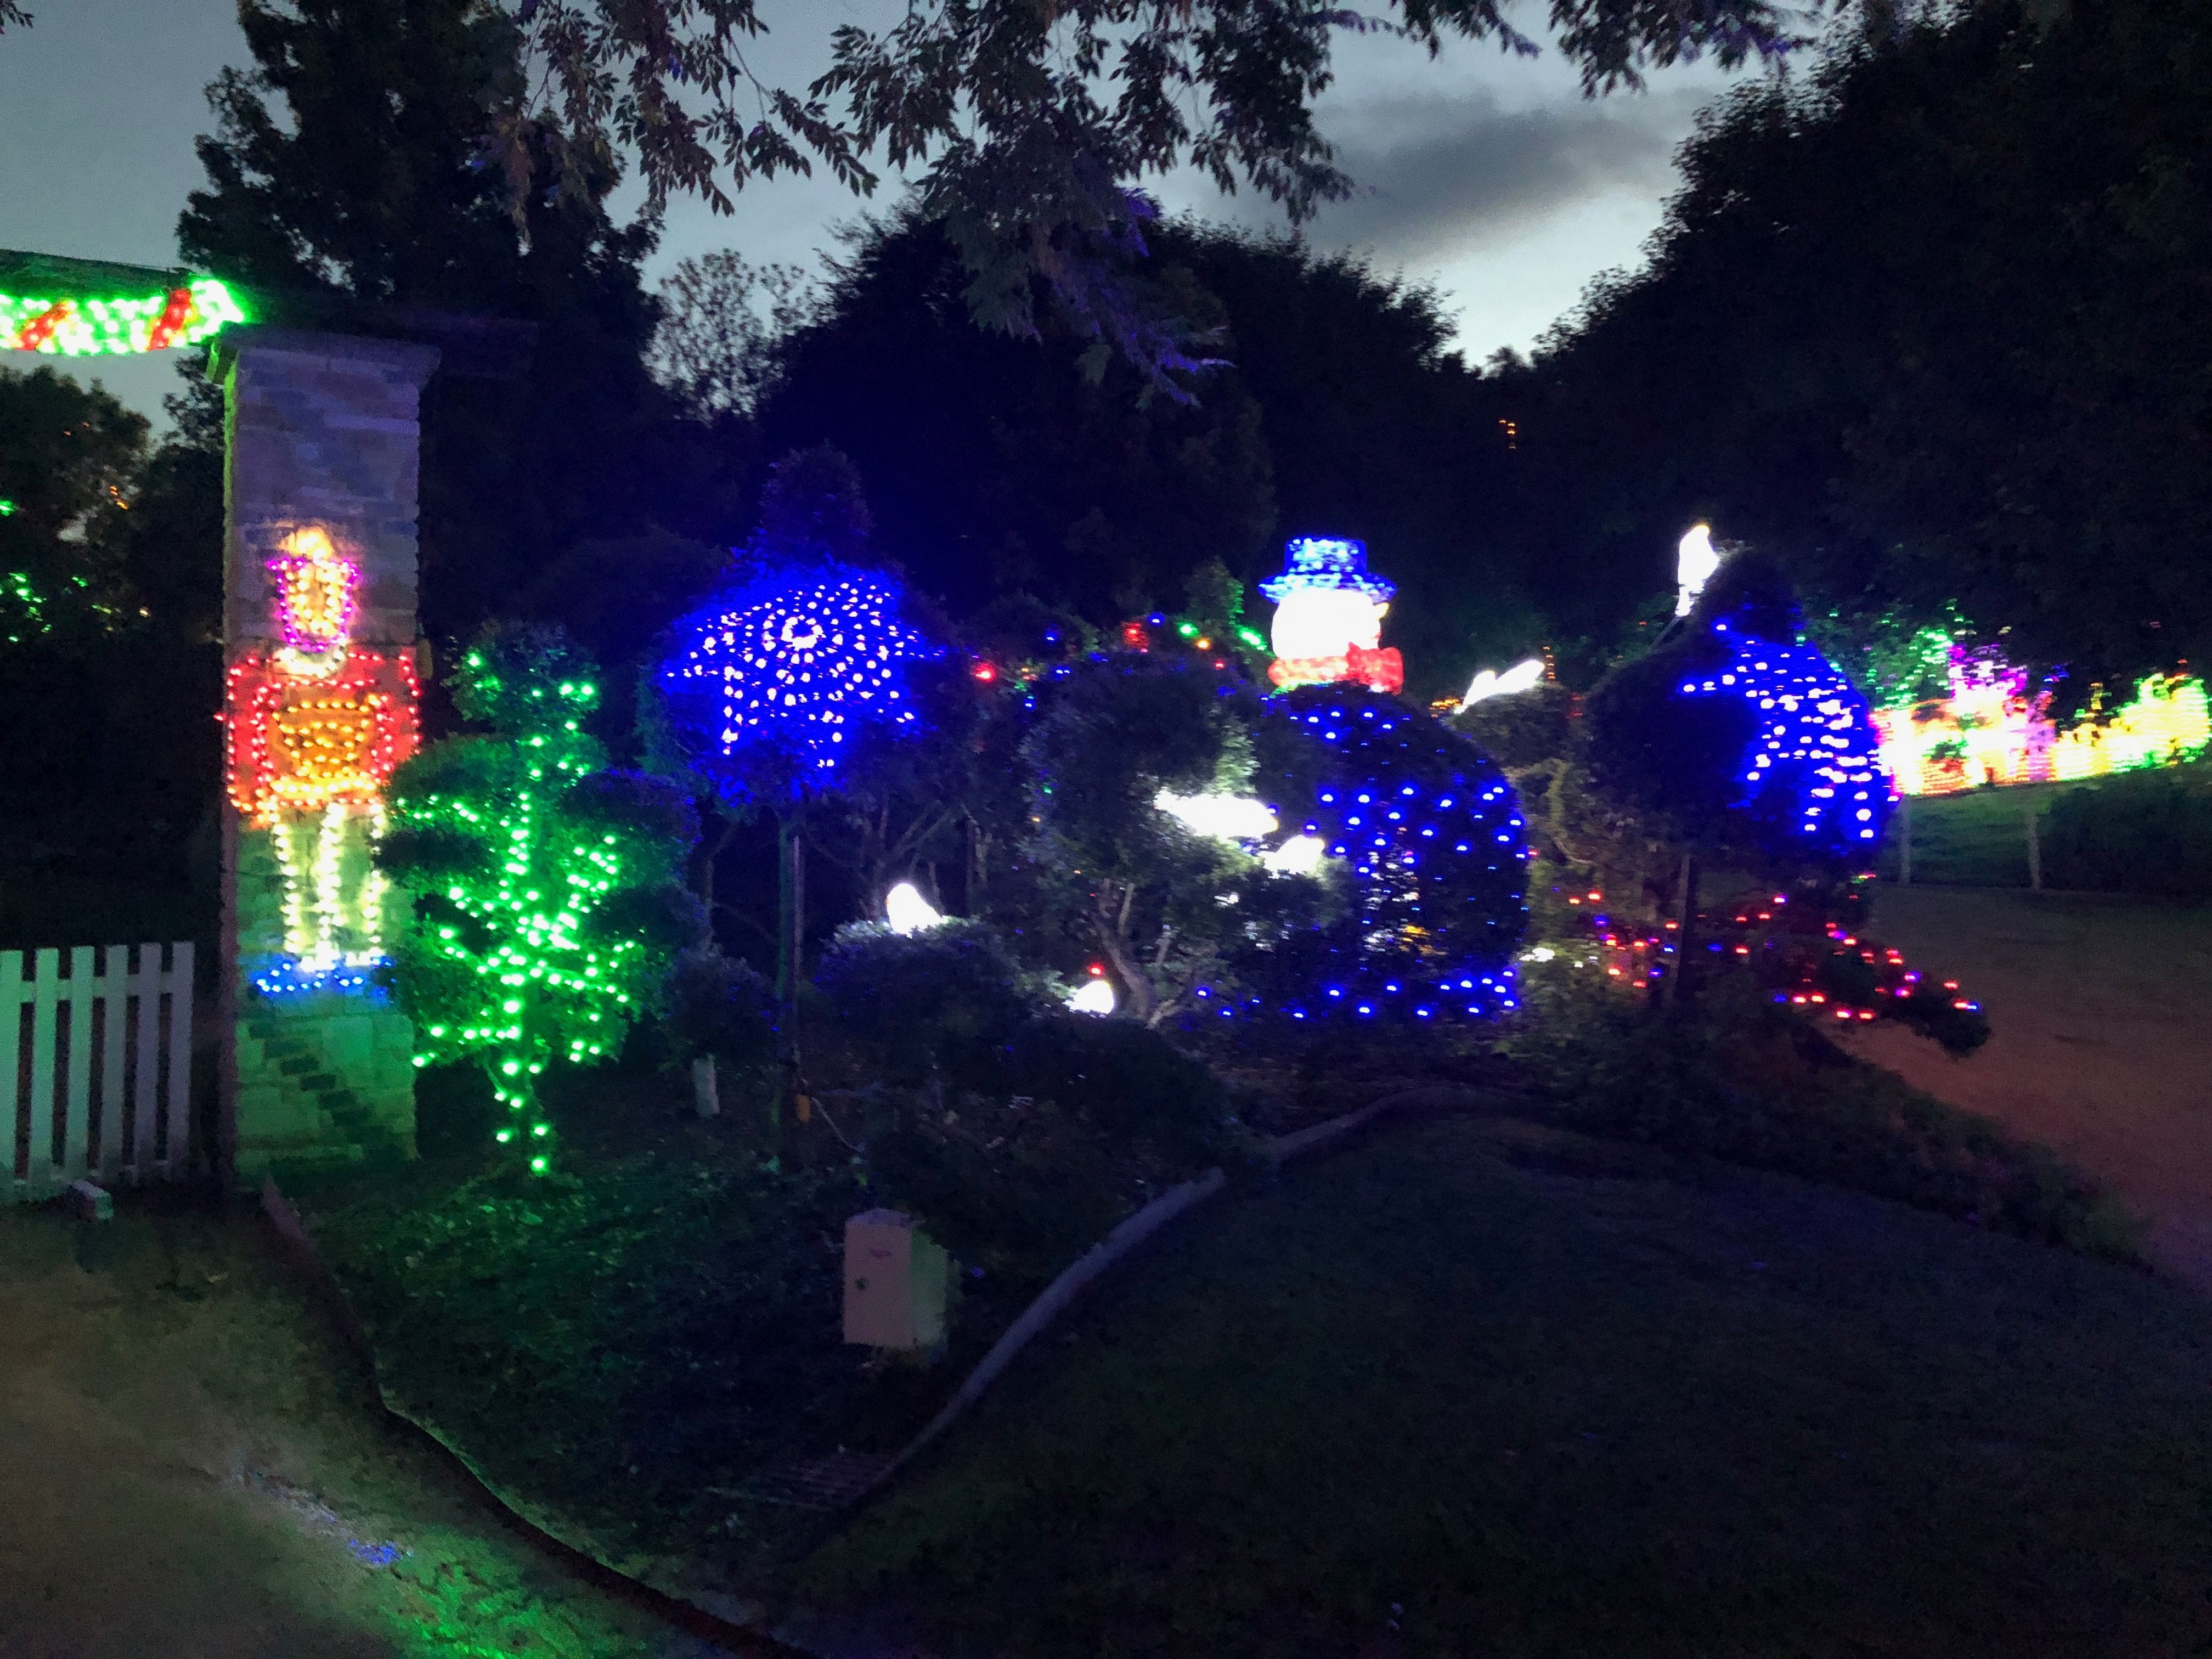 Hunter Valley Gardens Christmas Lights 2018-2019 Public Day Night Tour Image -5c149f3d85184